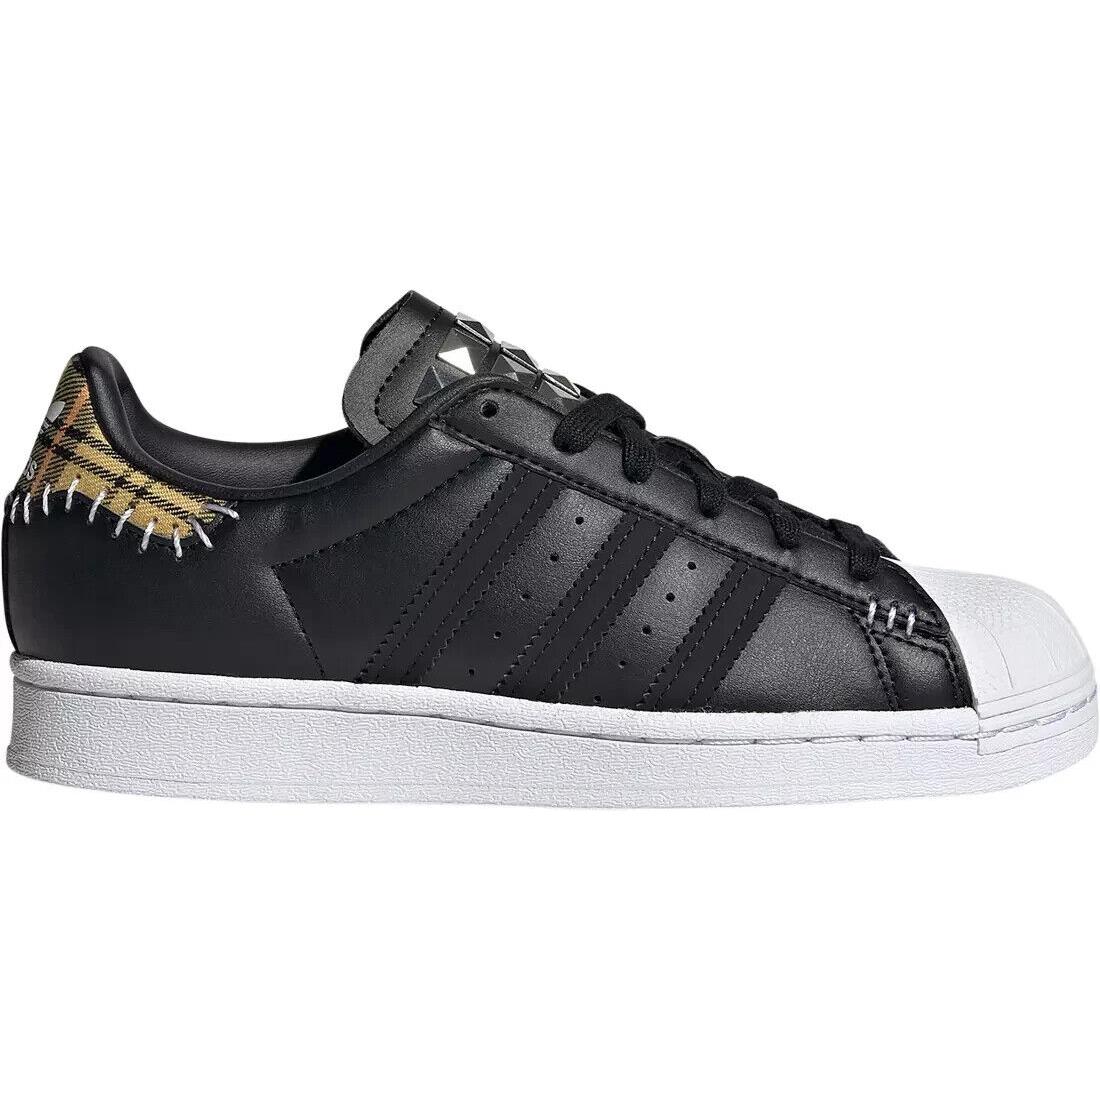 Adidas N7362 Kids Superstar J Sneaker Core Black/team Gold Size 3.5